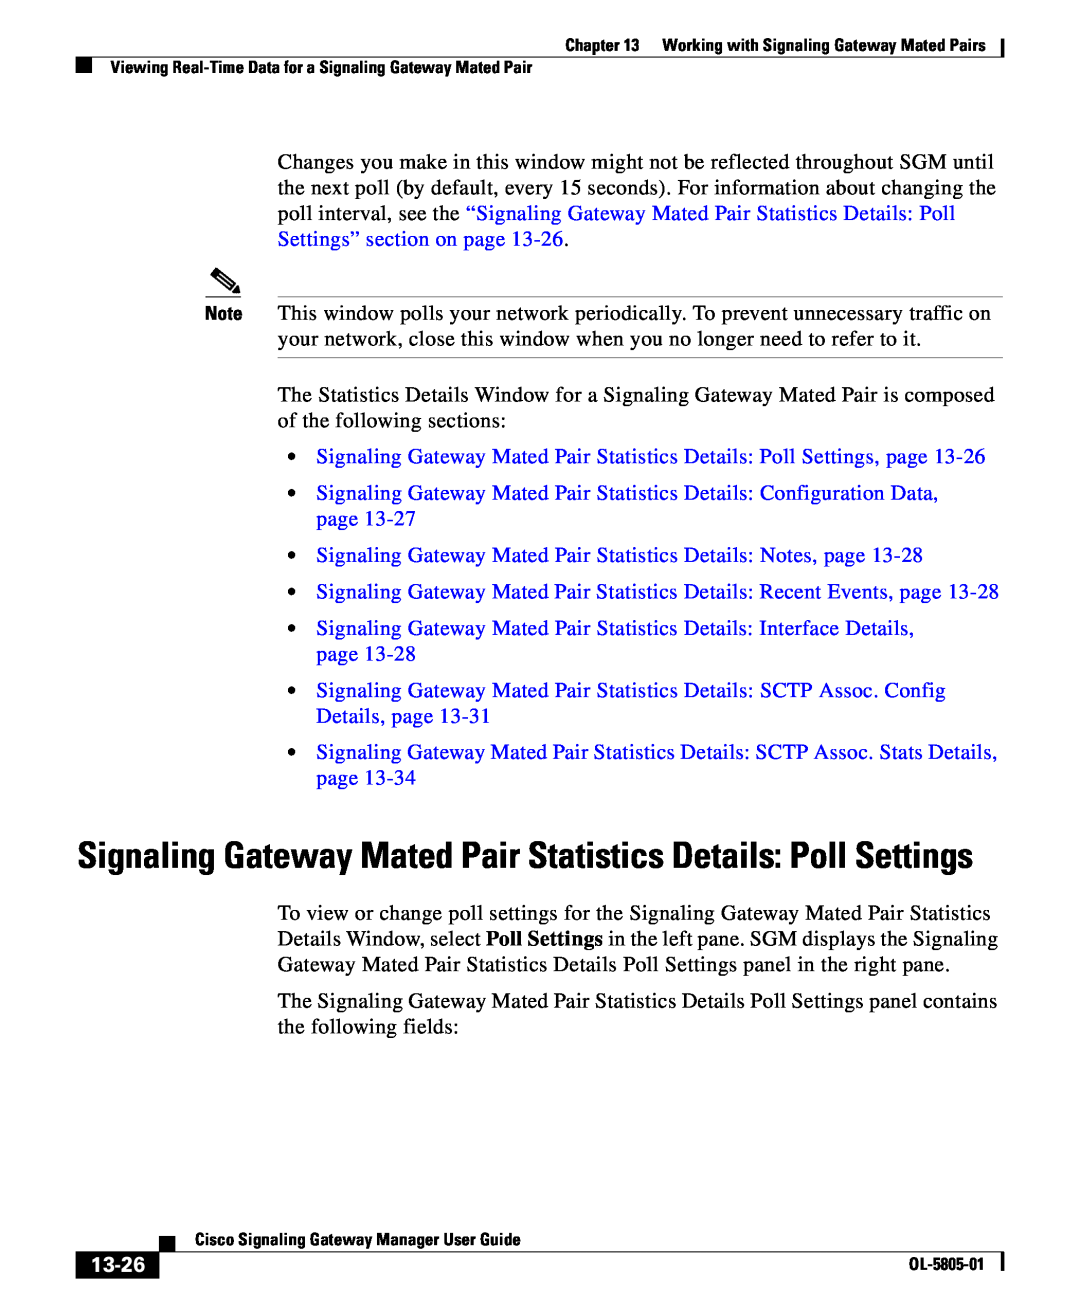 Cisco Systems OL-5805-01 manual Signaling Gateway Mated Pair Statistics Details Poll Settings, 13-26 